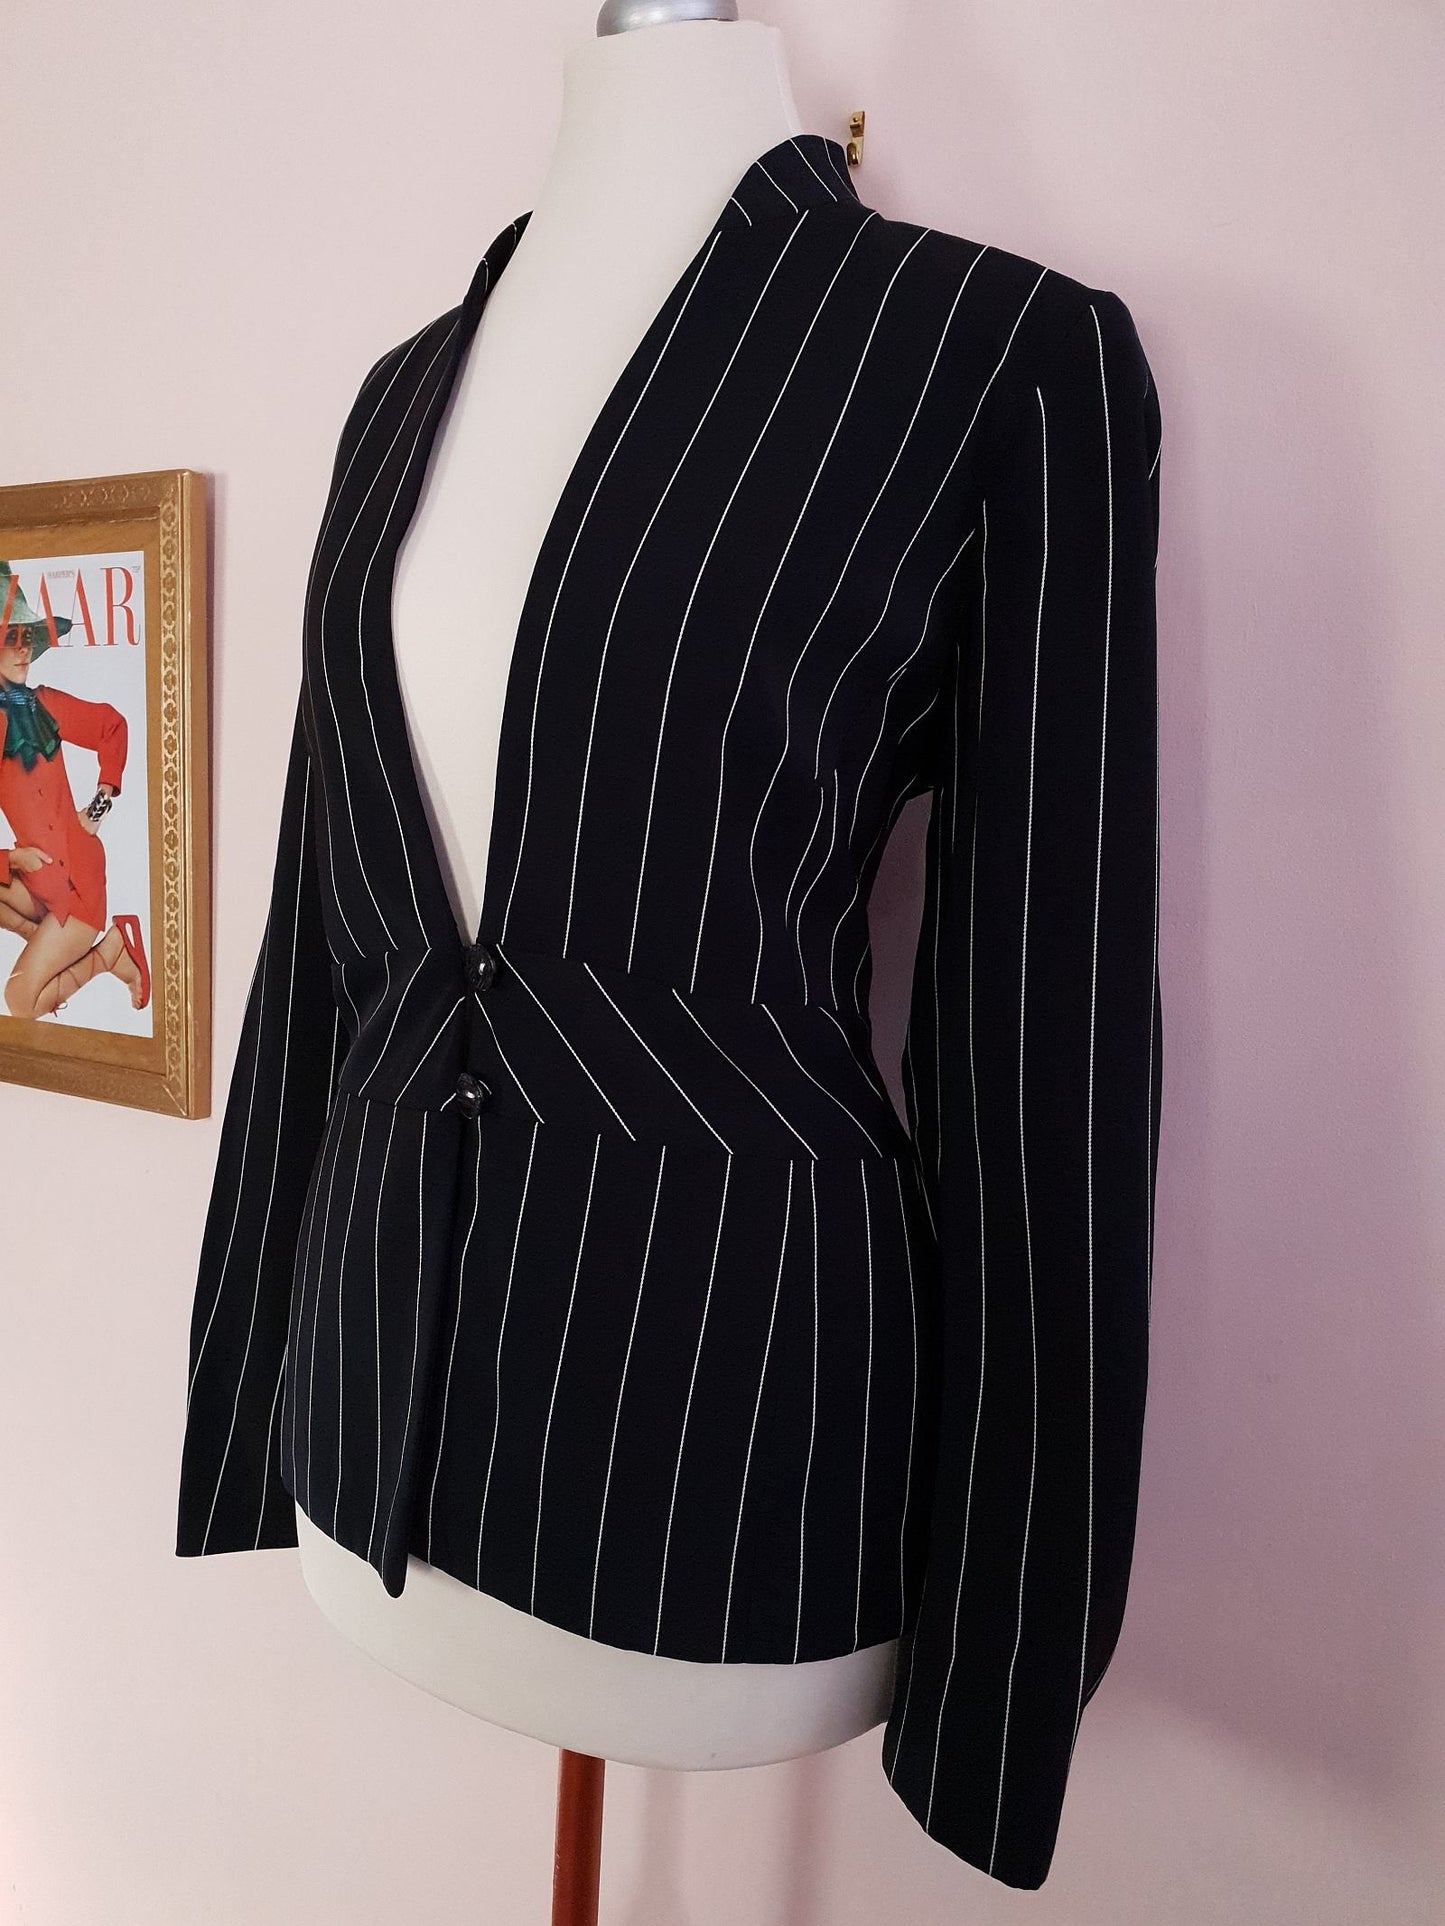 Vintage 90s Pinstripe Black Jacket Blazer Preppy- Size 12 - Ladies